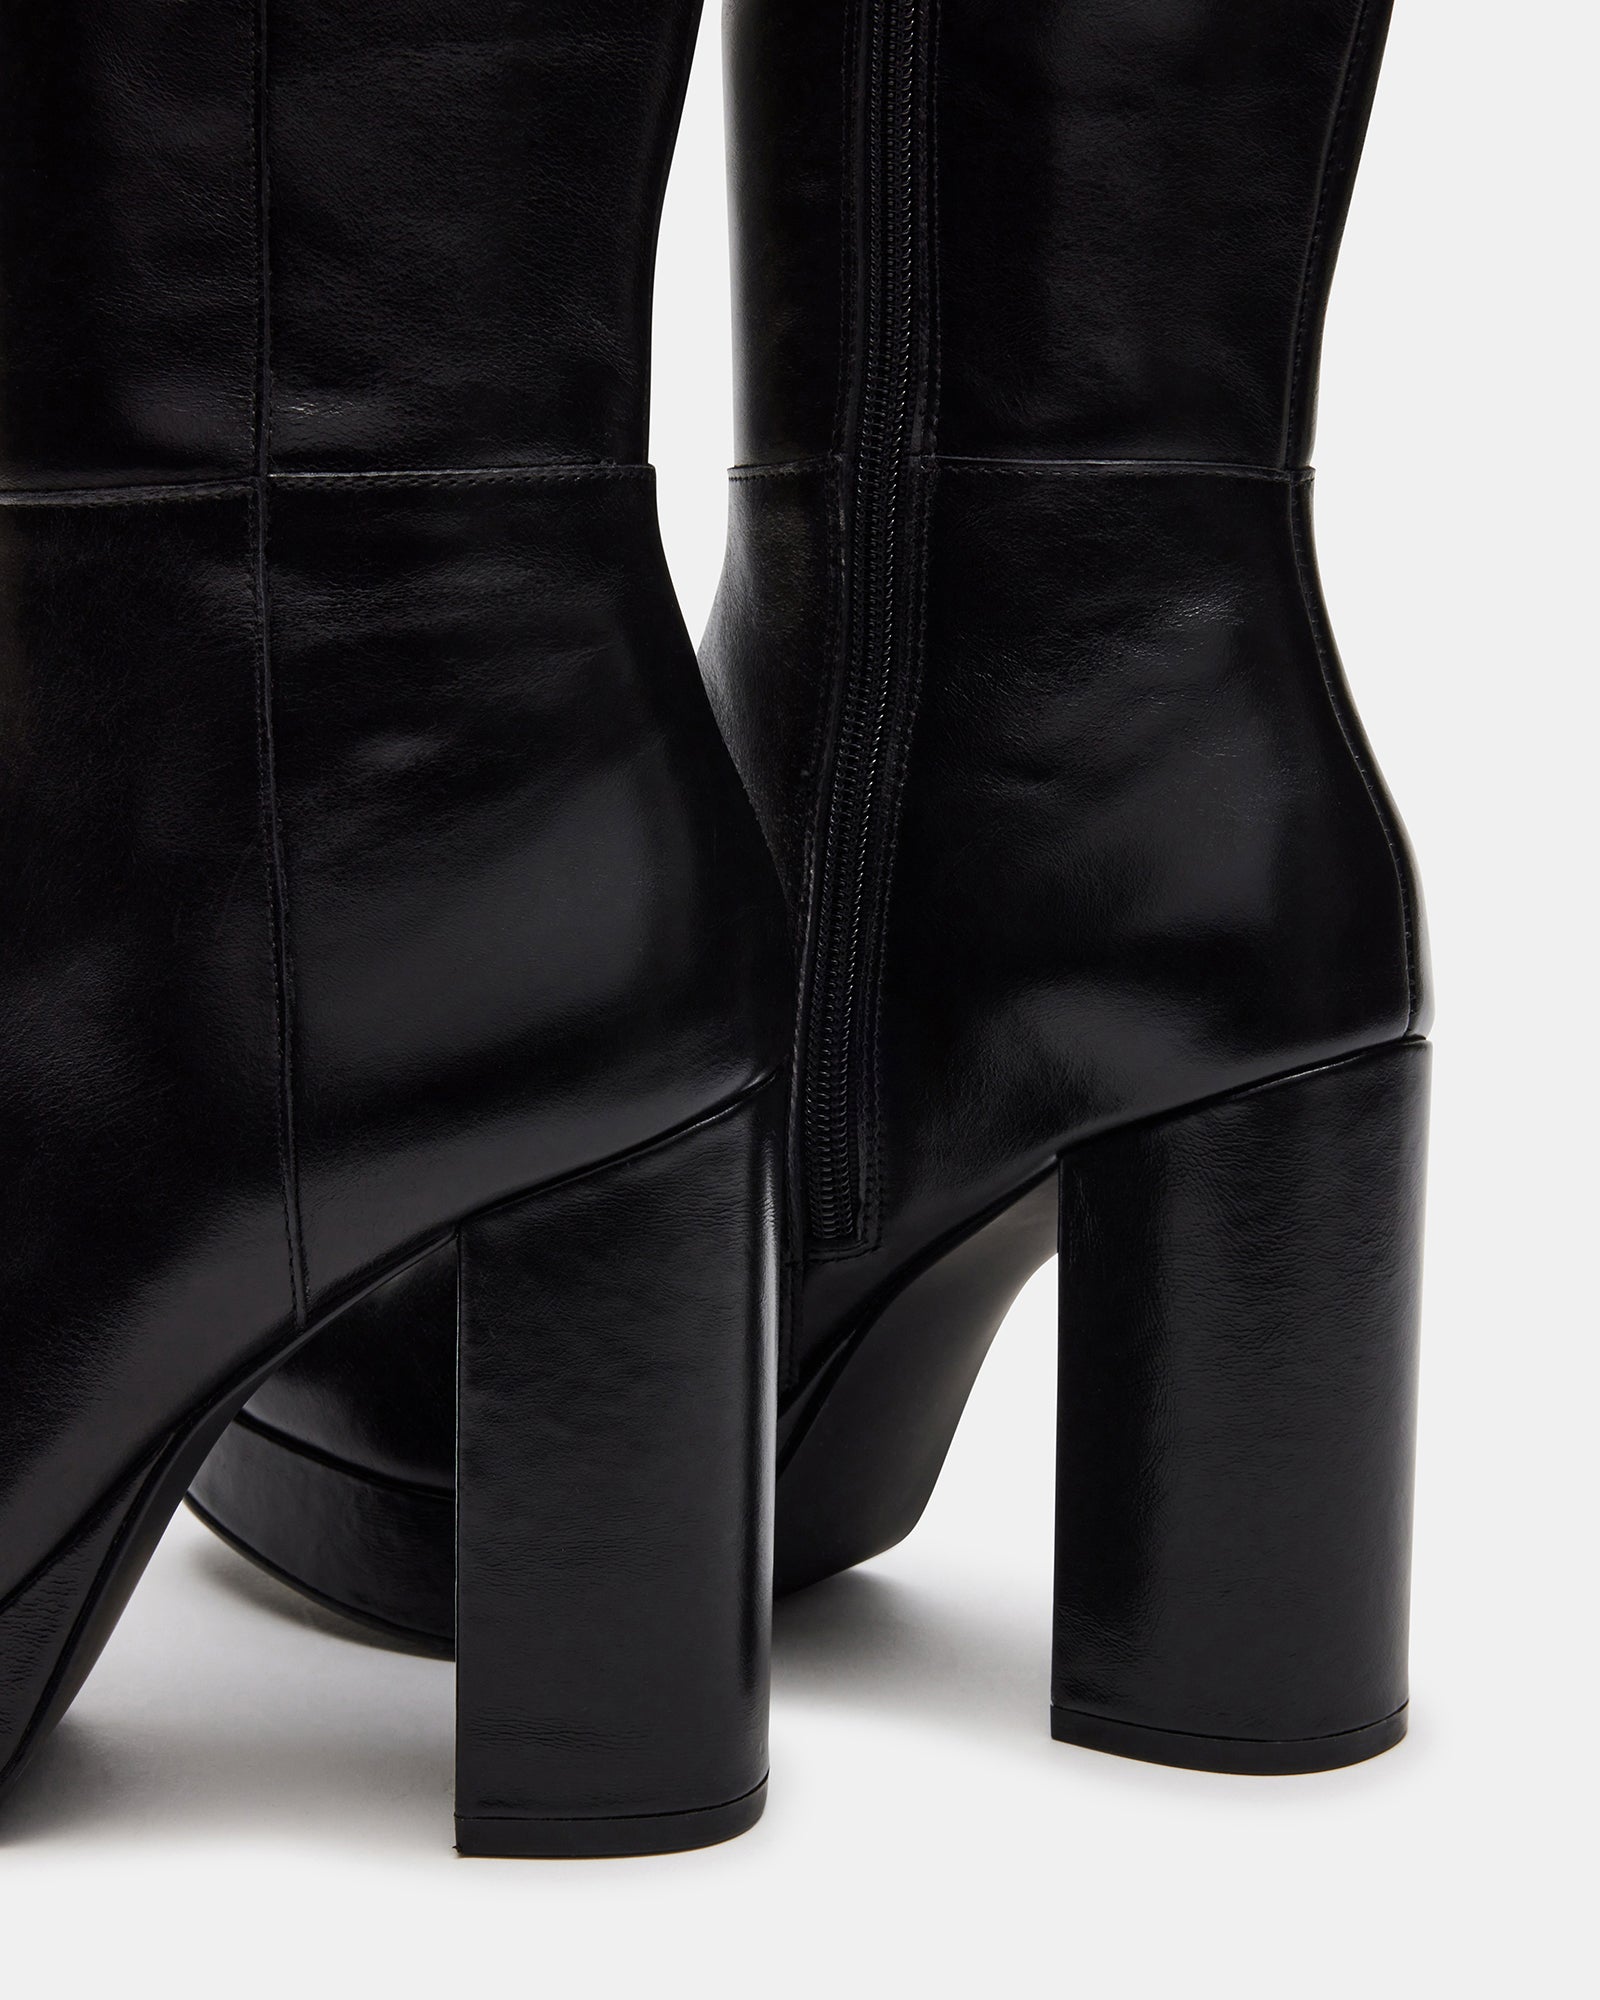 AZURA Black Leather Block Heel Knee High Boot | Women's Boots – Steve ...